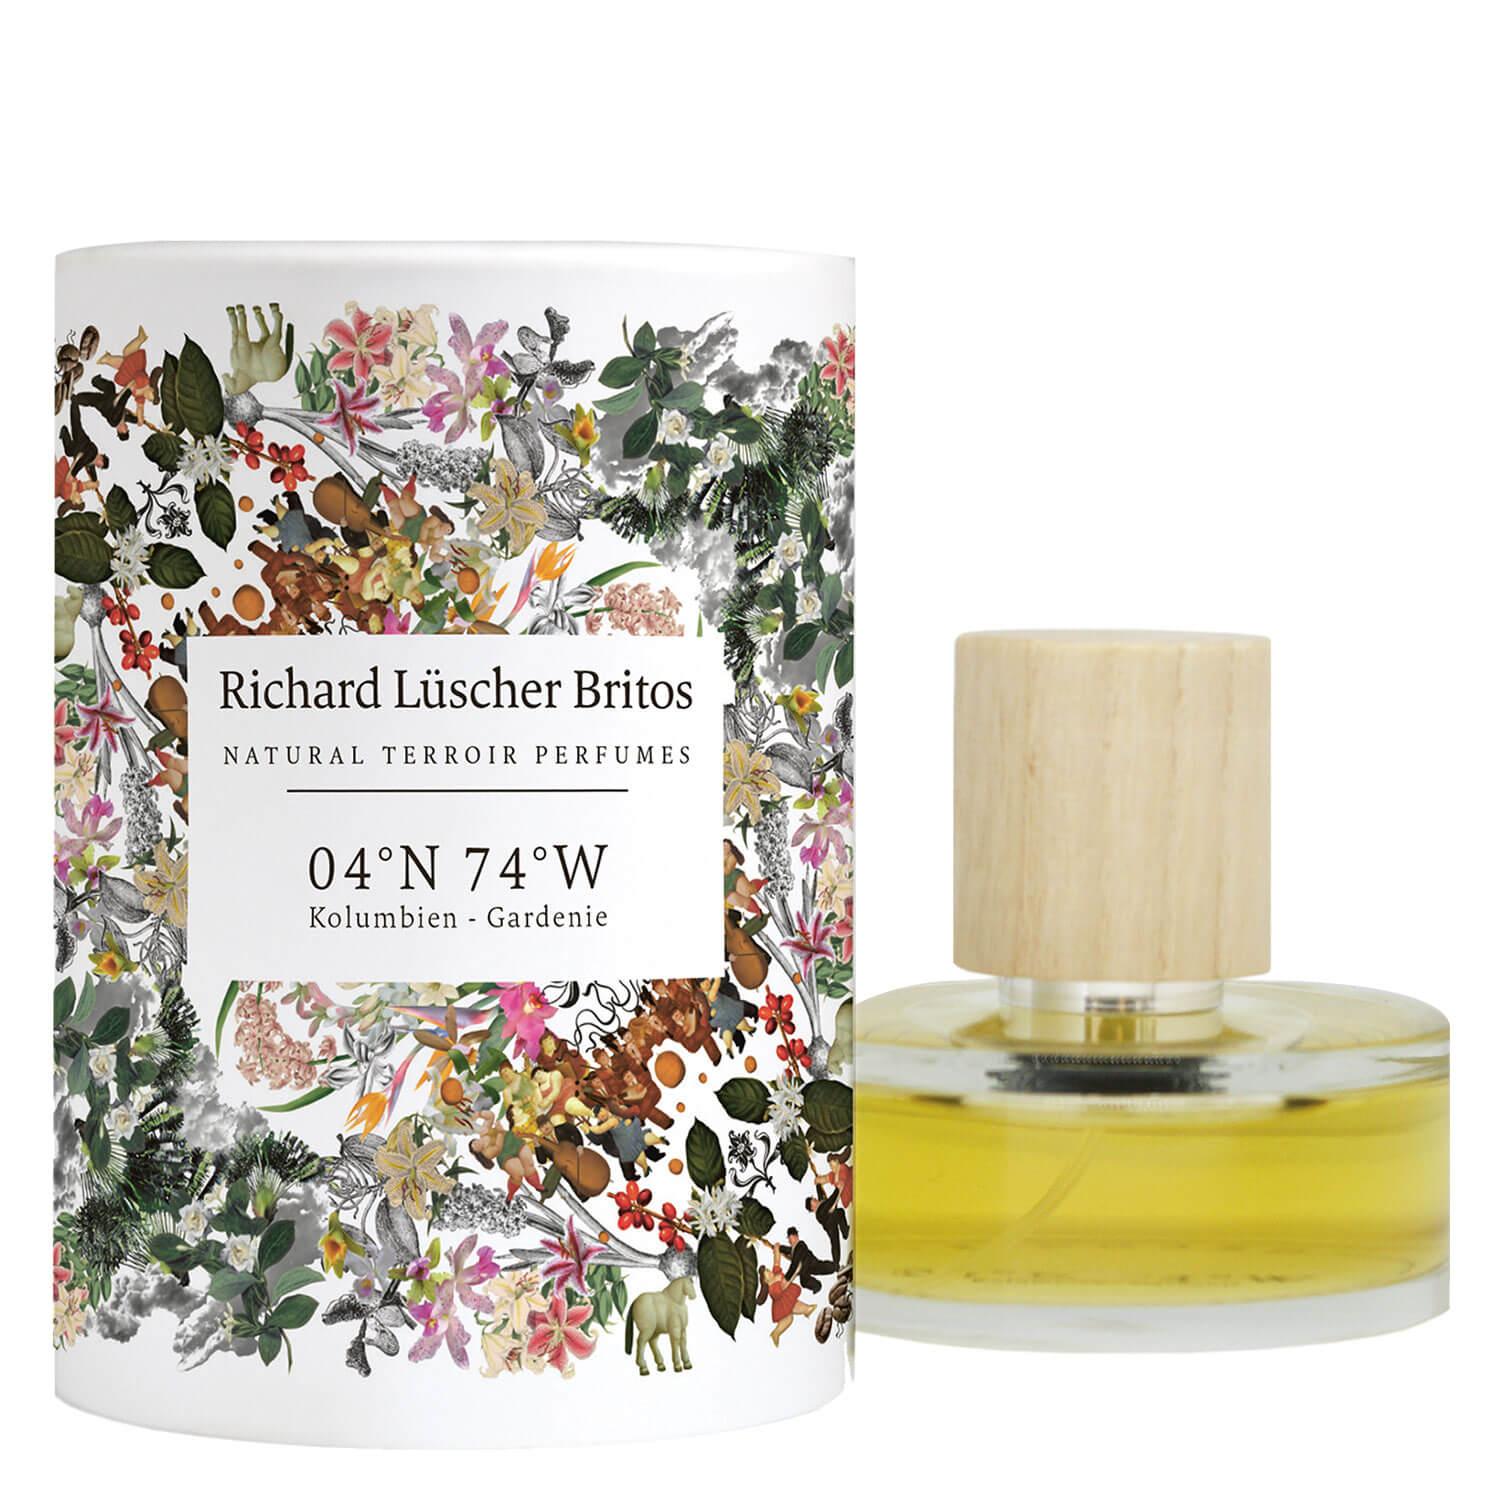 Farfalla Fragrance - 04°N 74°W Kolumbien Gardenie Natural Terroir Parfum